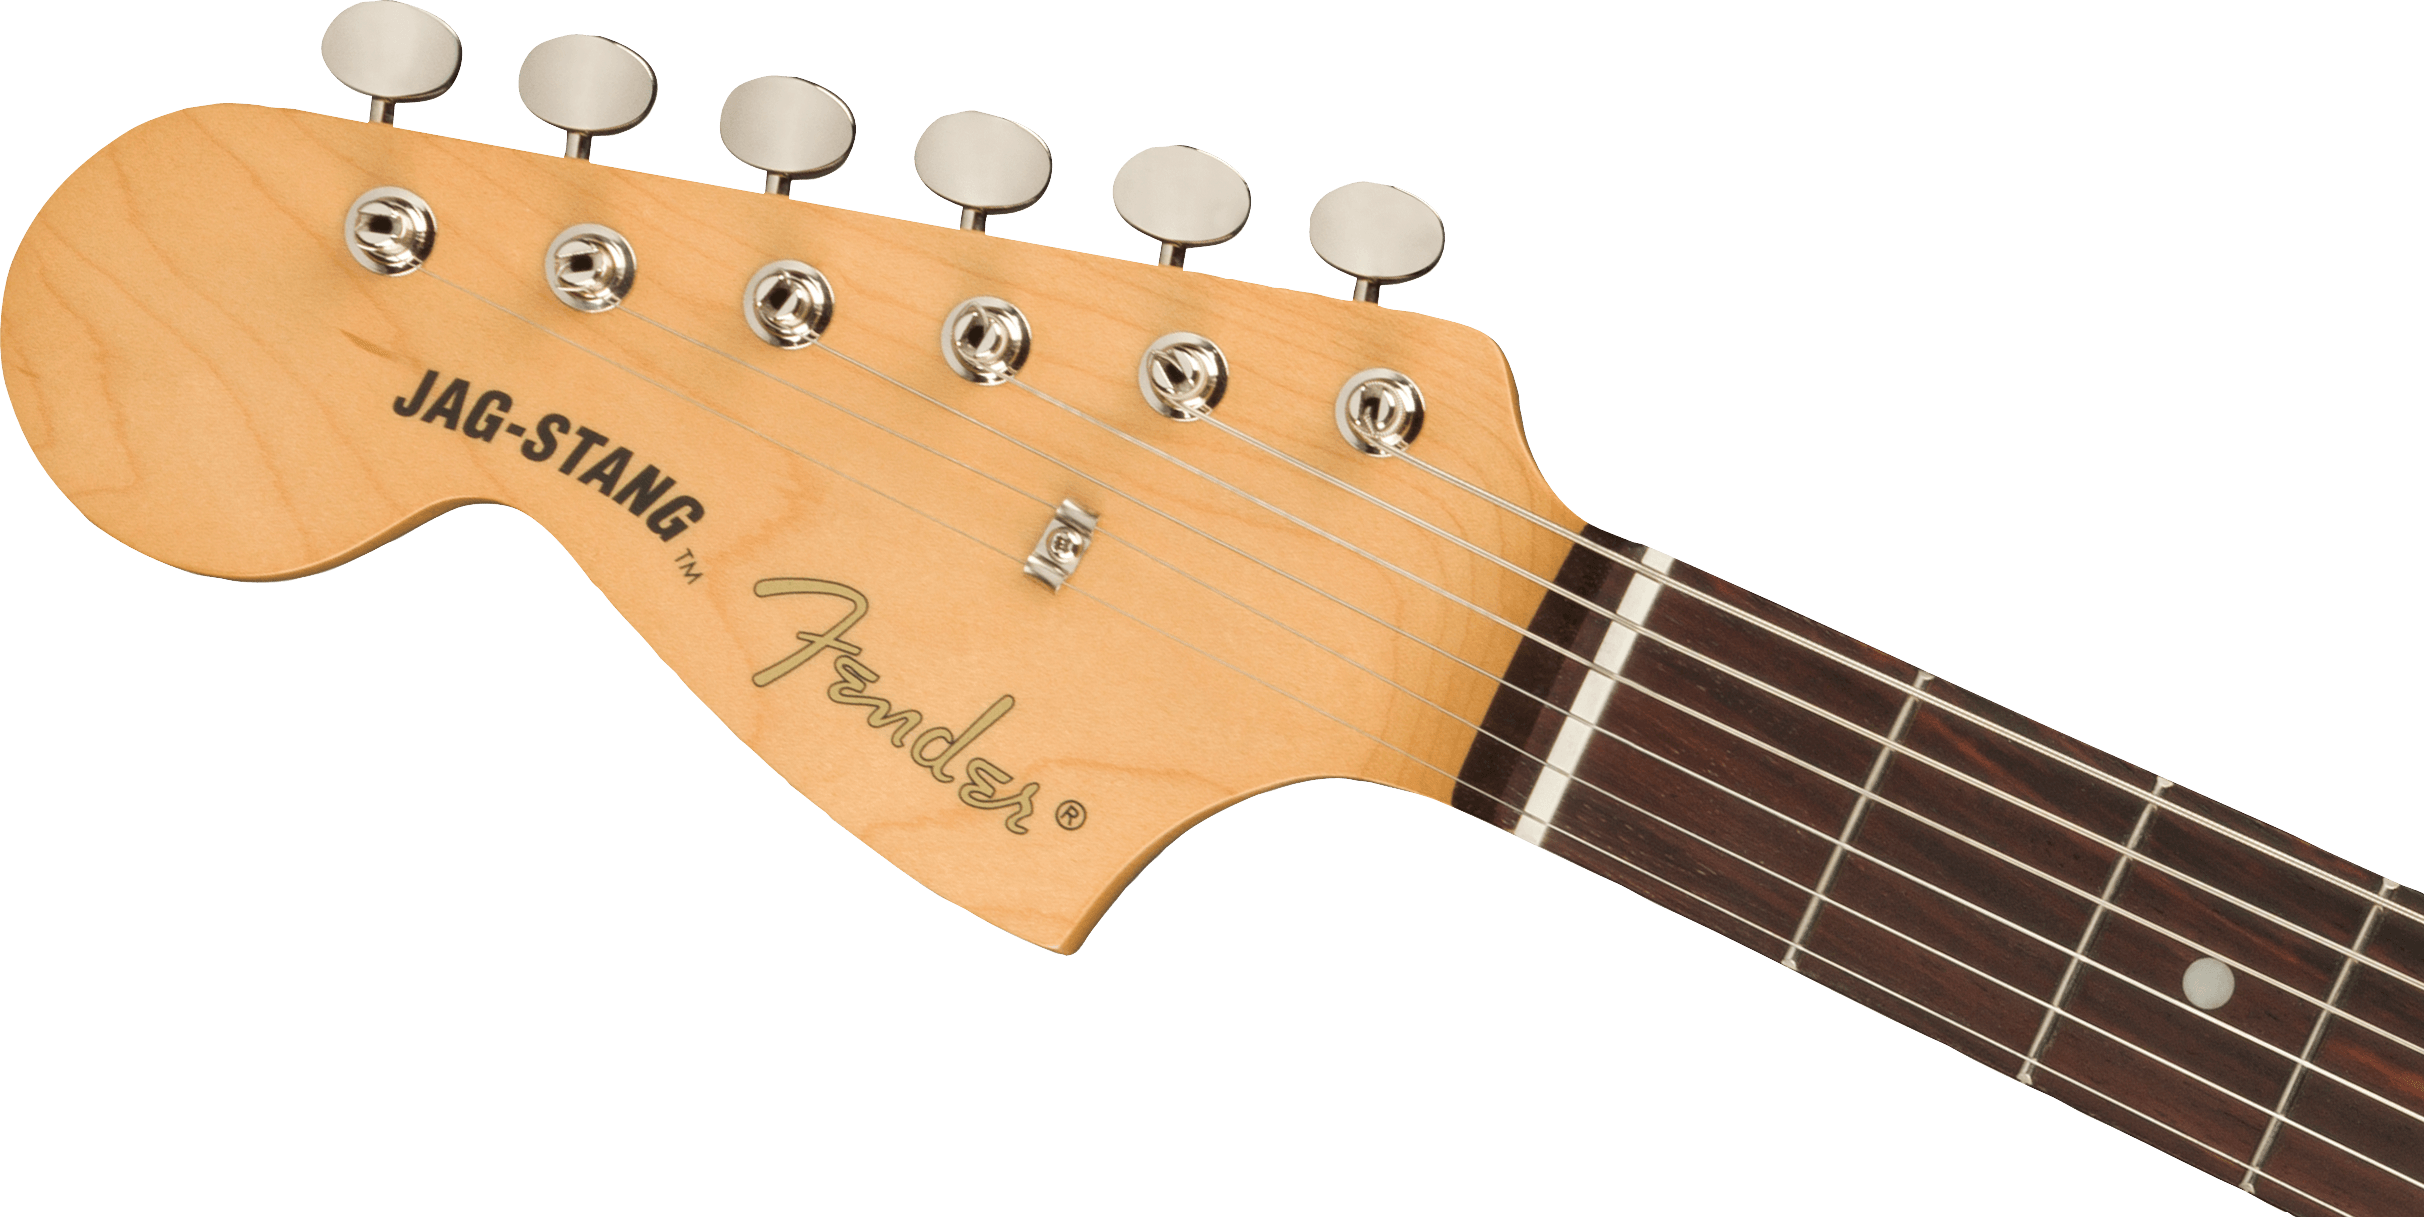 Fender Jag-stang Kurt Cobain Artist Gaucher Hs Trem Rw - Fiesta Red - Left-handed electric guitar - Variation 3